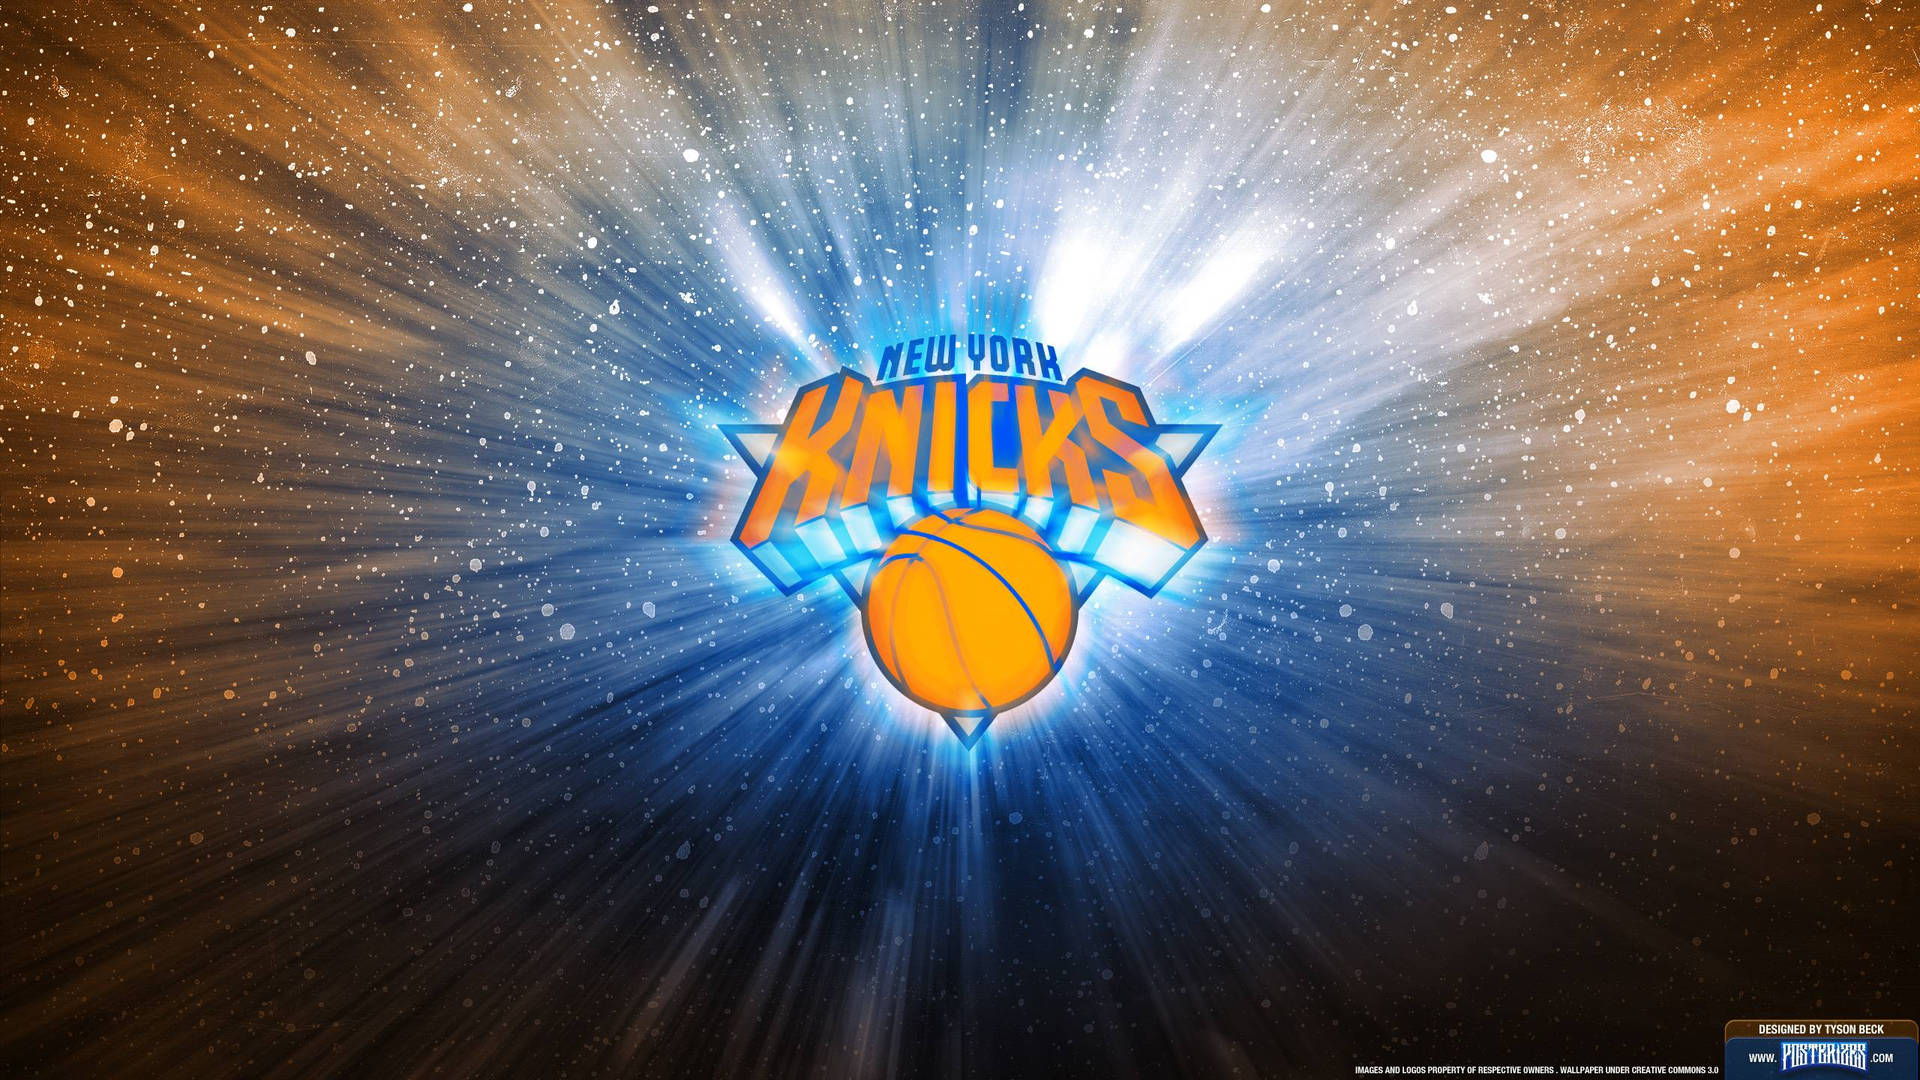 New York Knicks Basketball Team